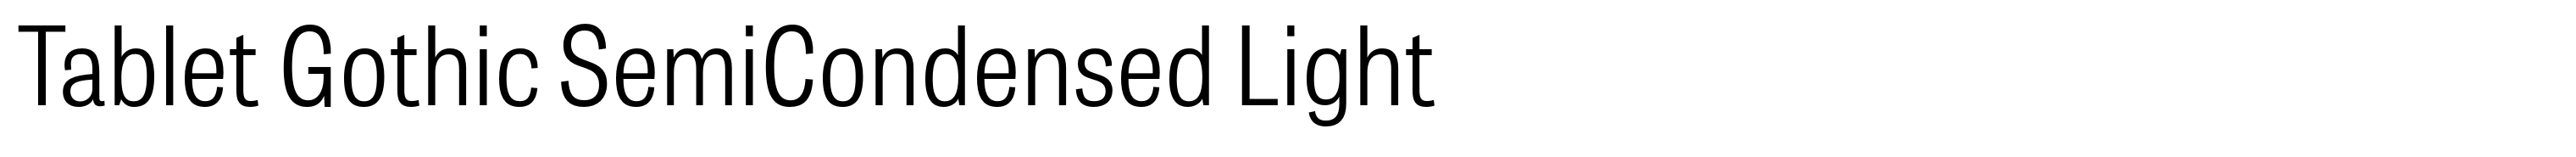 Tablet Gothic SemiCondensed Light